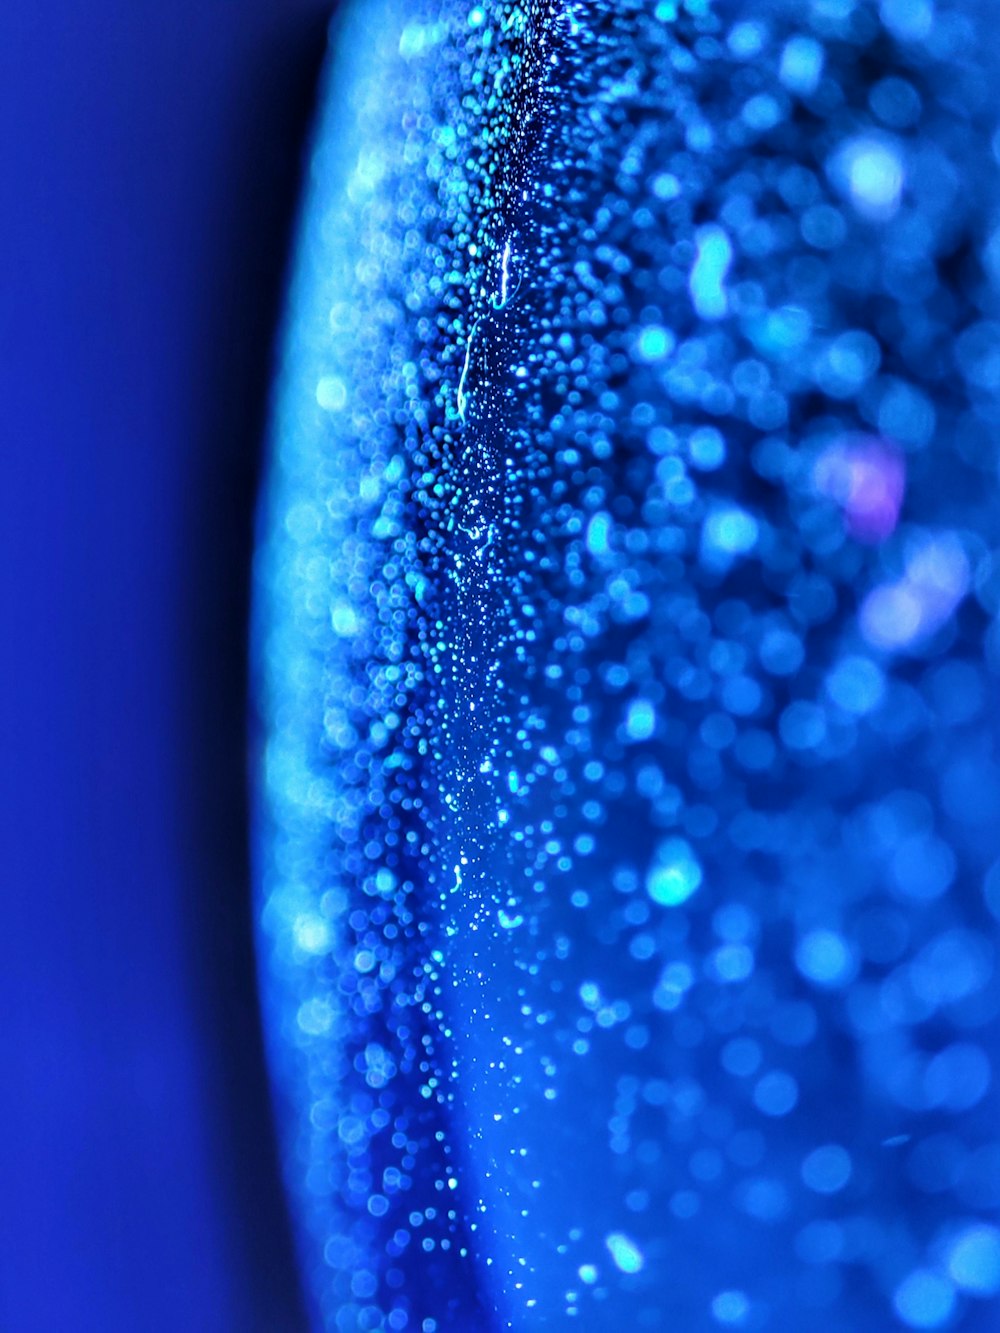 a close up shot of a blue glass